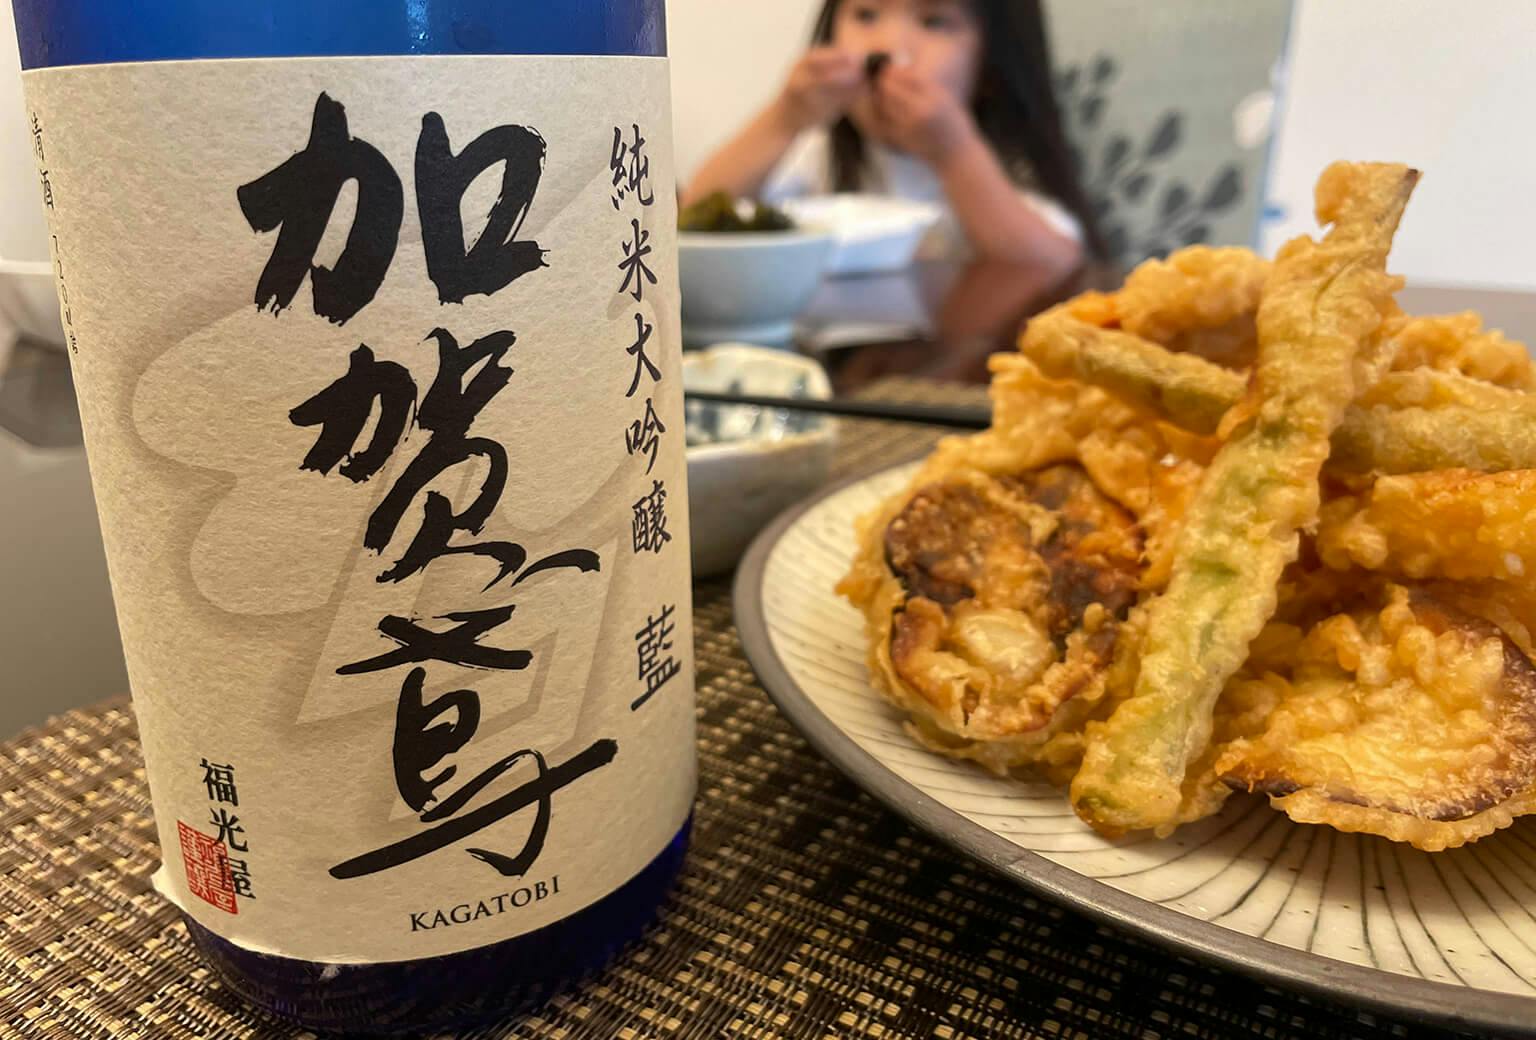 Kagatobi “Ai” with a tempura dish